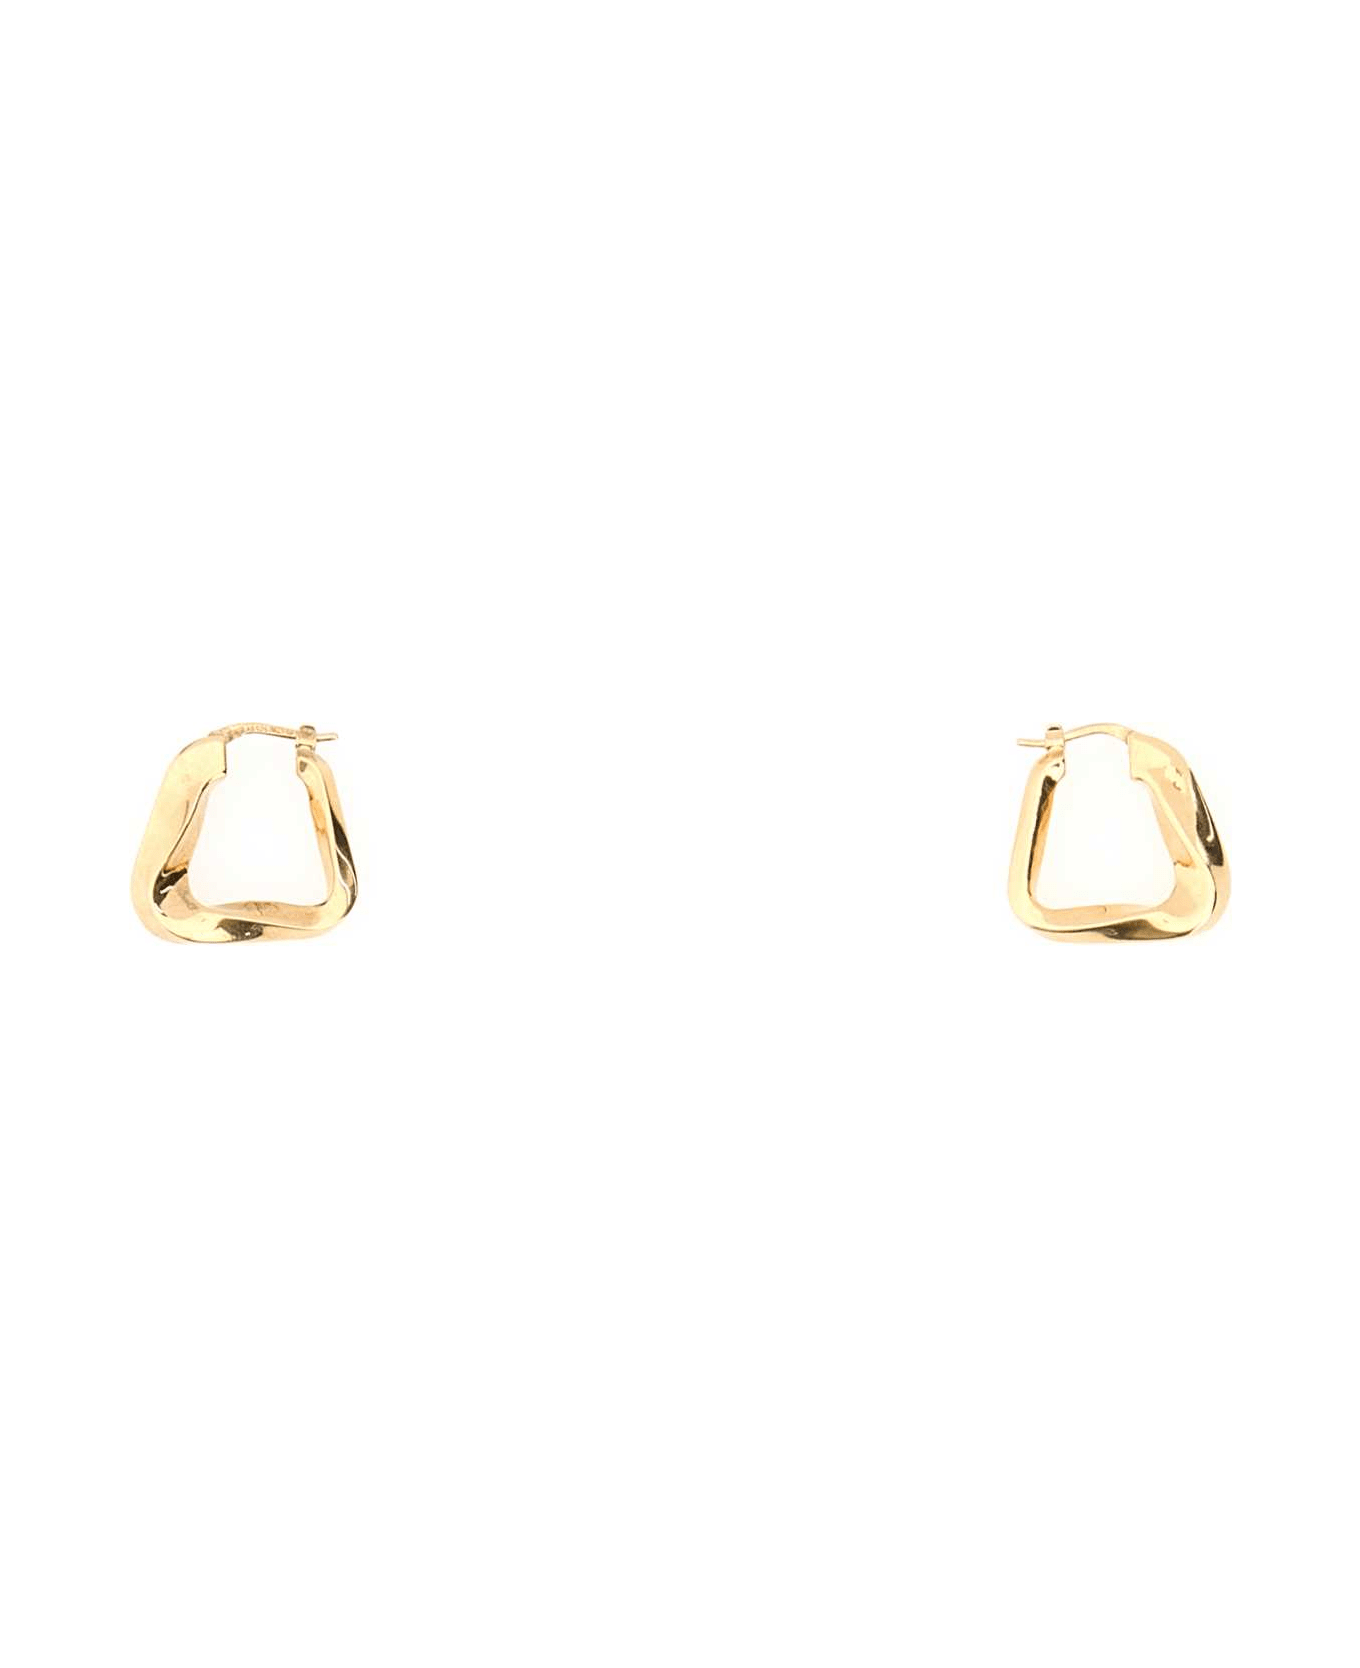 Bottega Veneta Gold Metal Earrings - GOLD